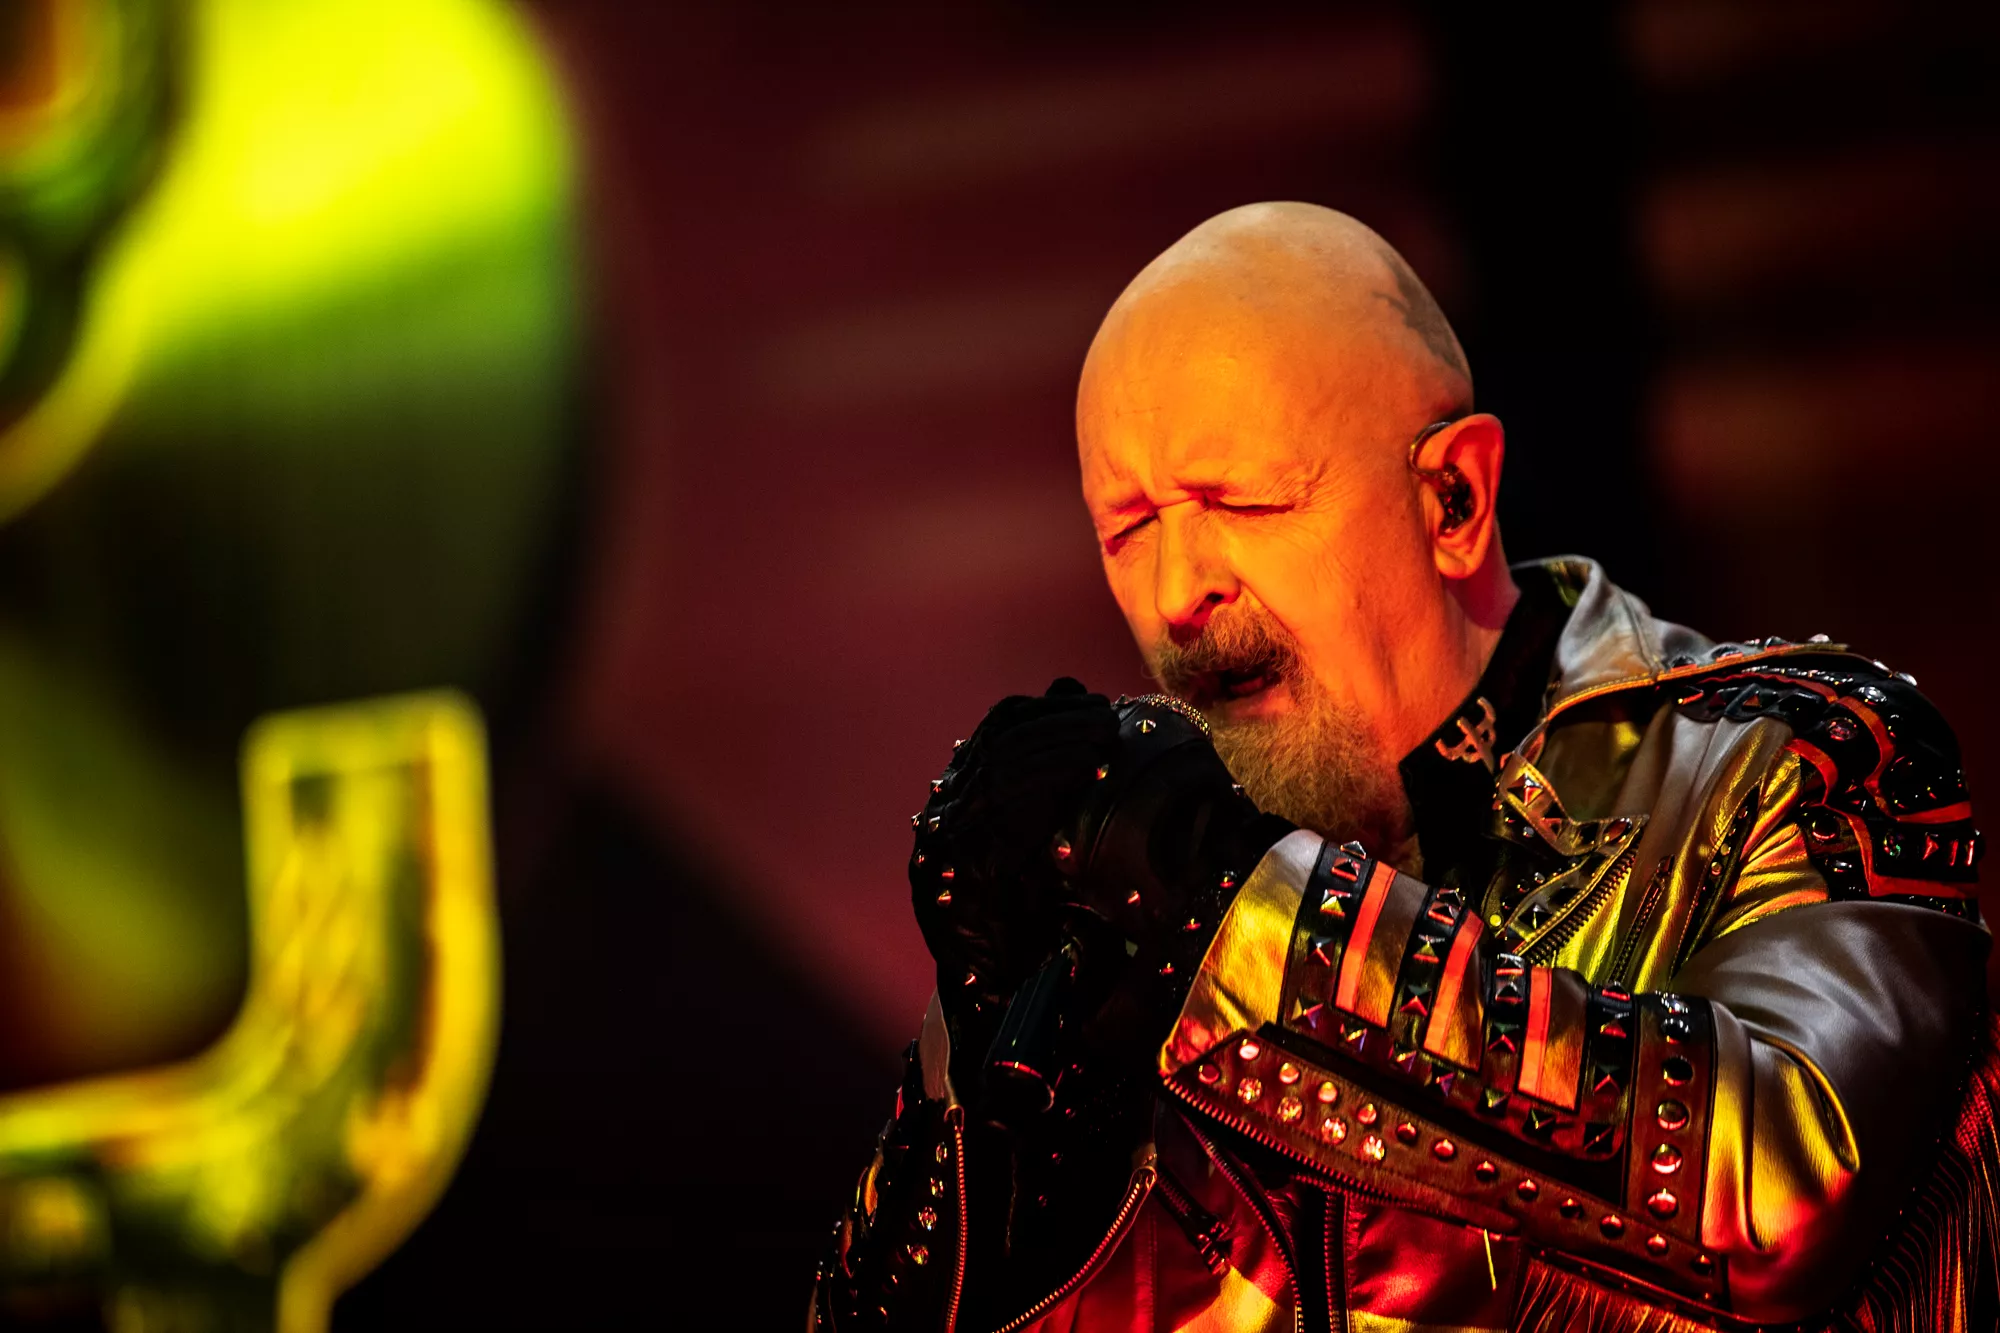 Judas Priest-sångaren kämpade mot prostatacancer under pandemin